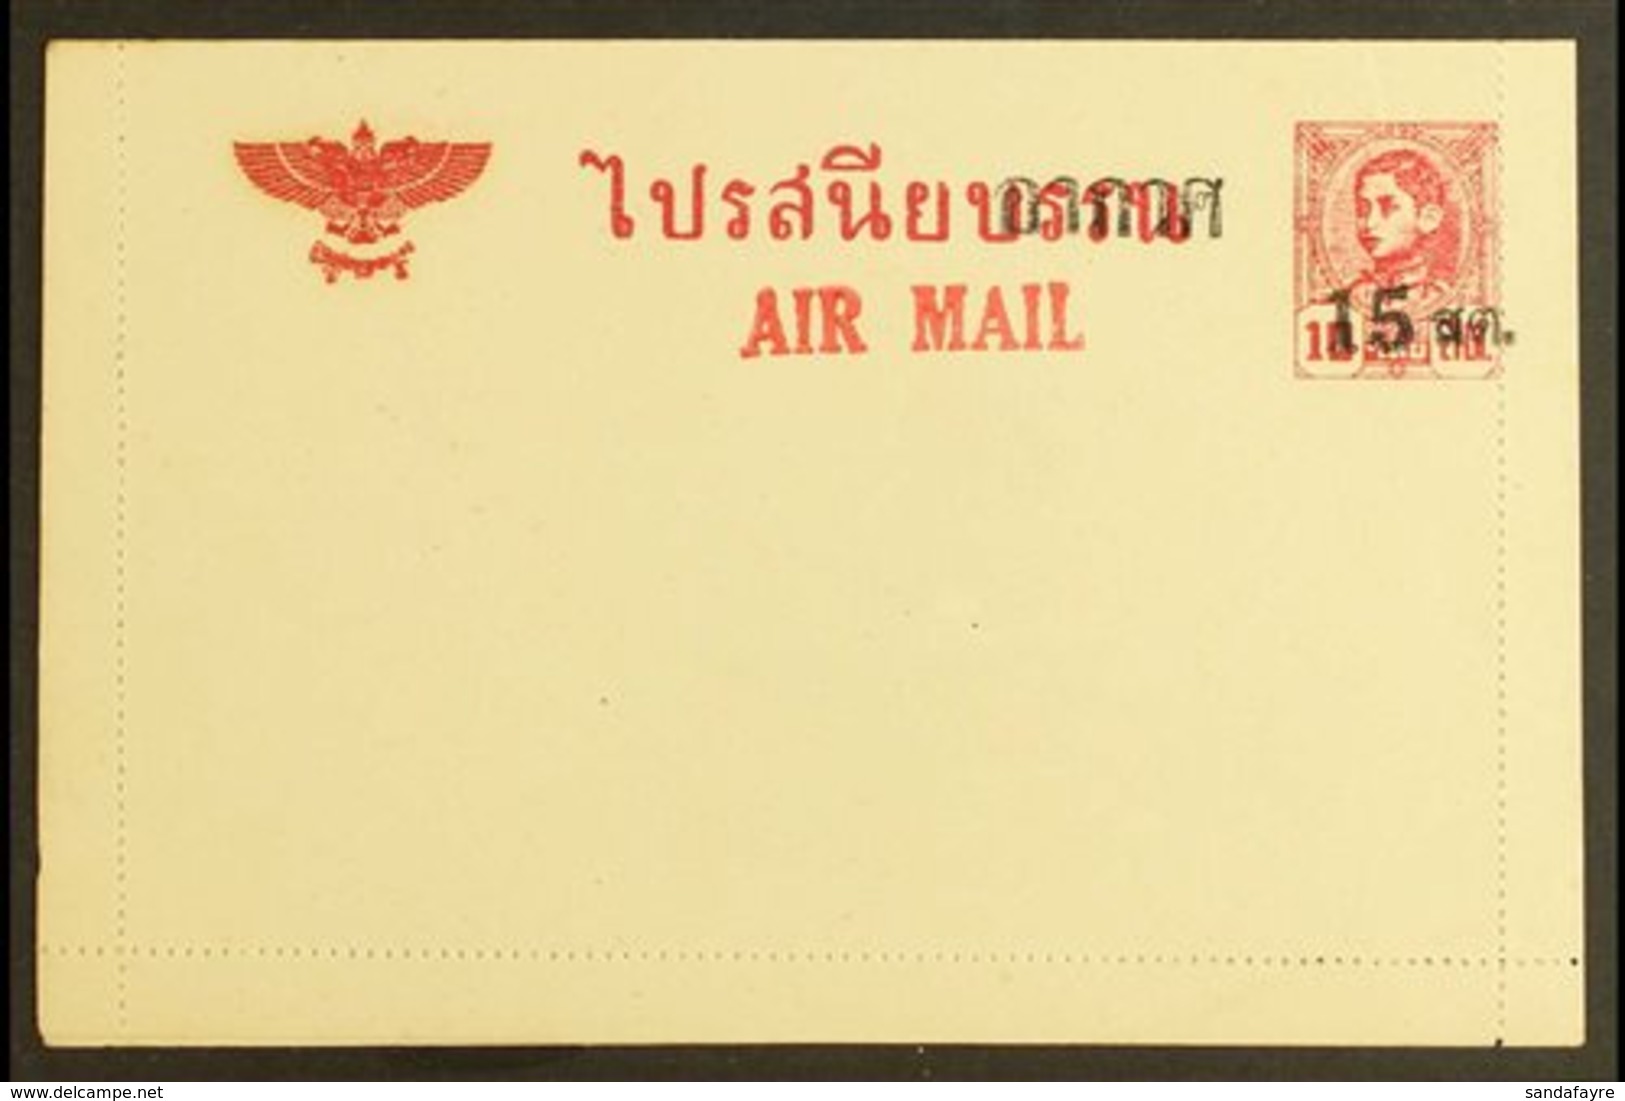 1948 (circa) UNISSUED AIR MAIL LETTER CARD. 1943 10stg Carmine Letter Card With Additional "Air Mail" Inscription & 15st - Thaïlande